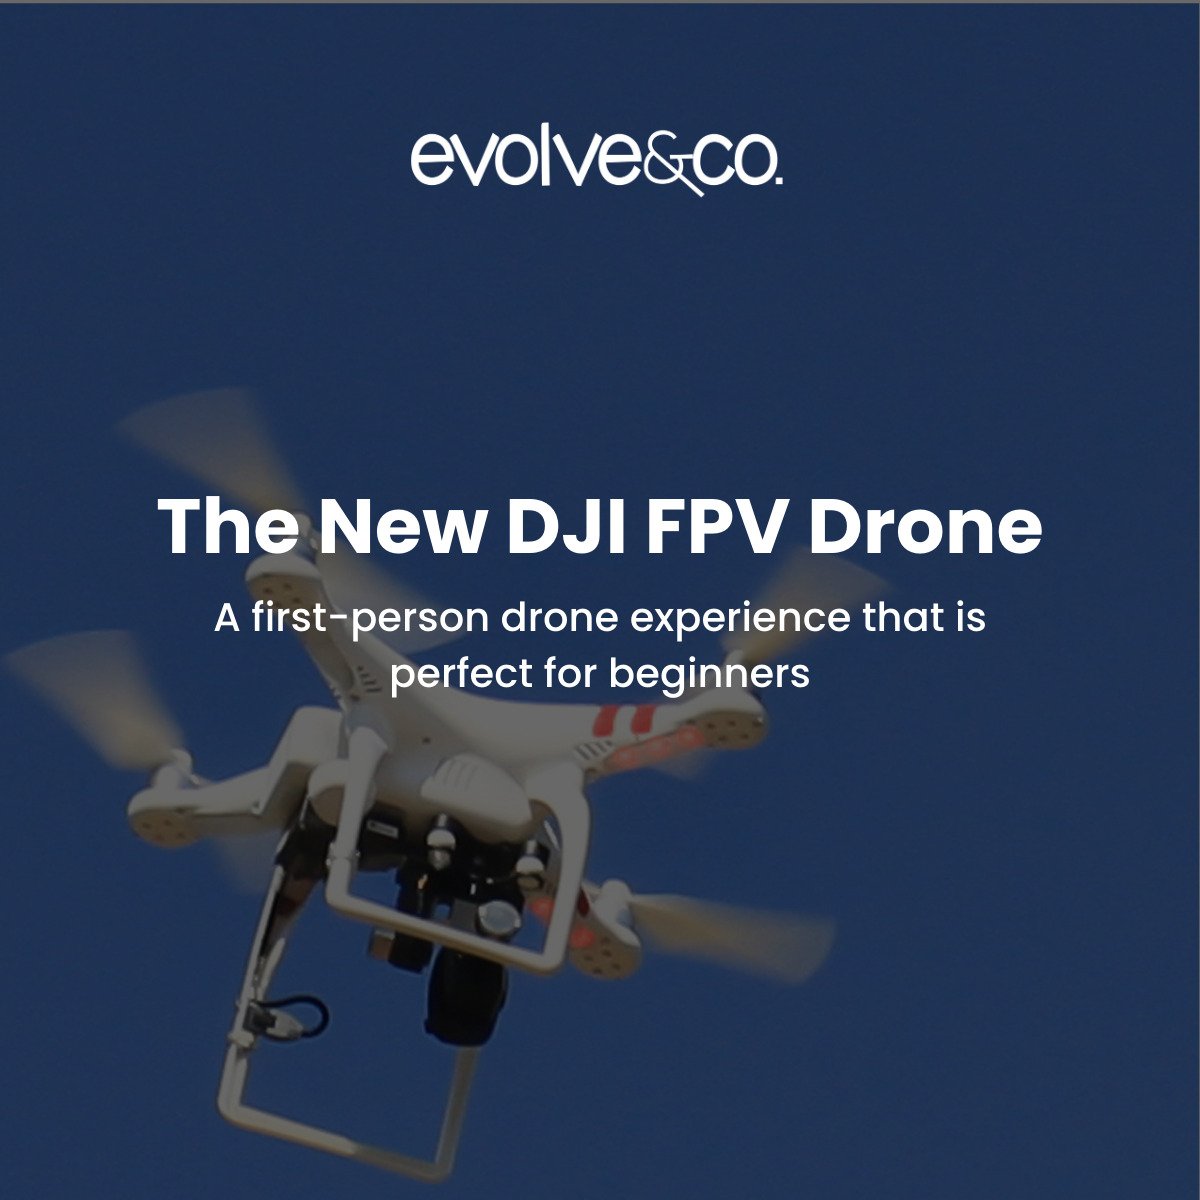 The New DJI FPV Drone